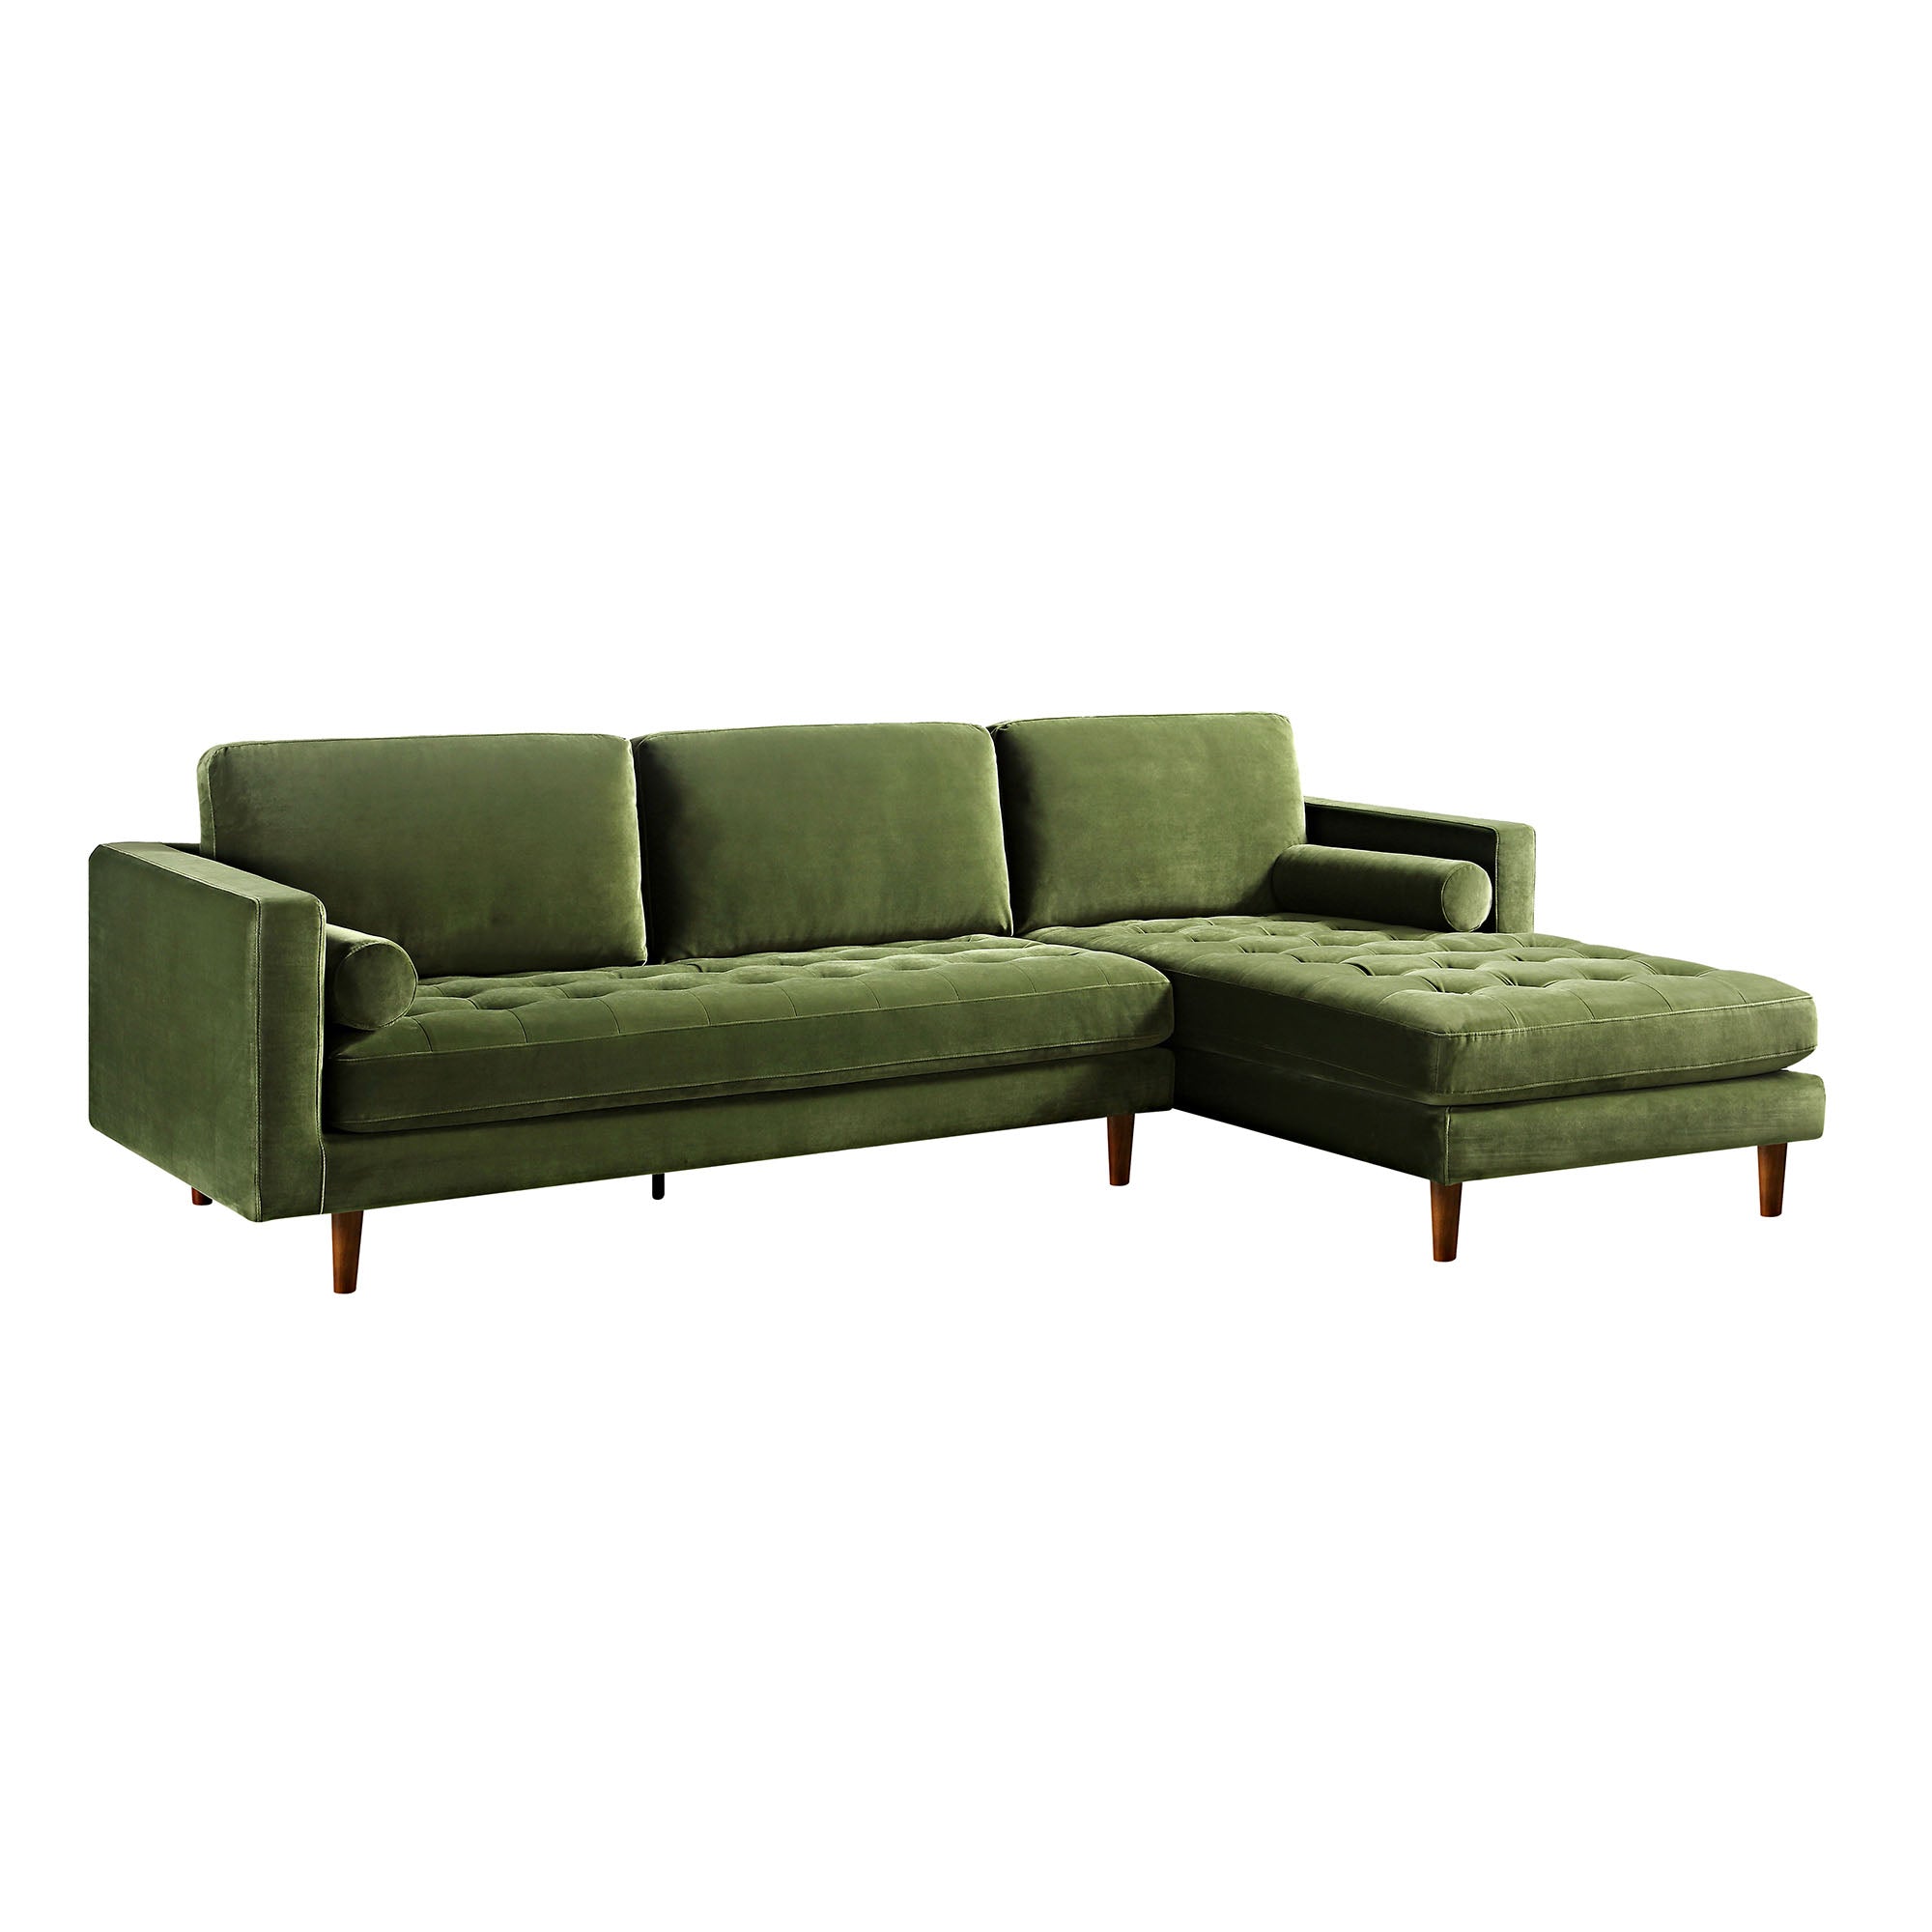 Henrietta Grand 4-Seater RHF Chaise End Sofa, Moss Green Velvet